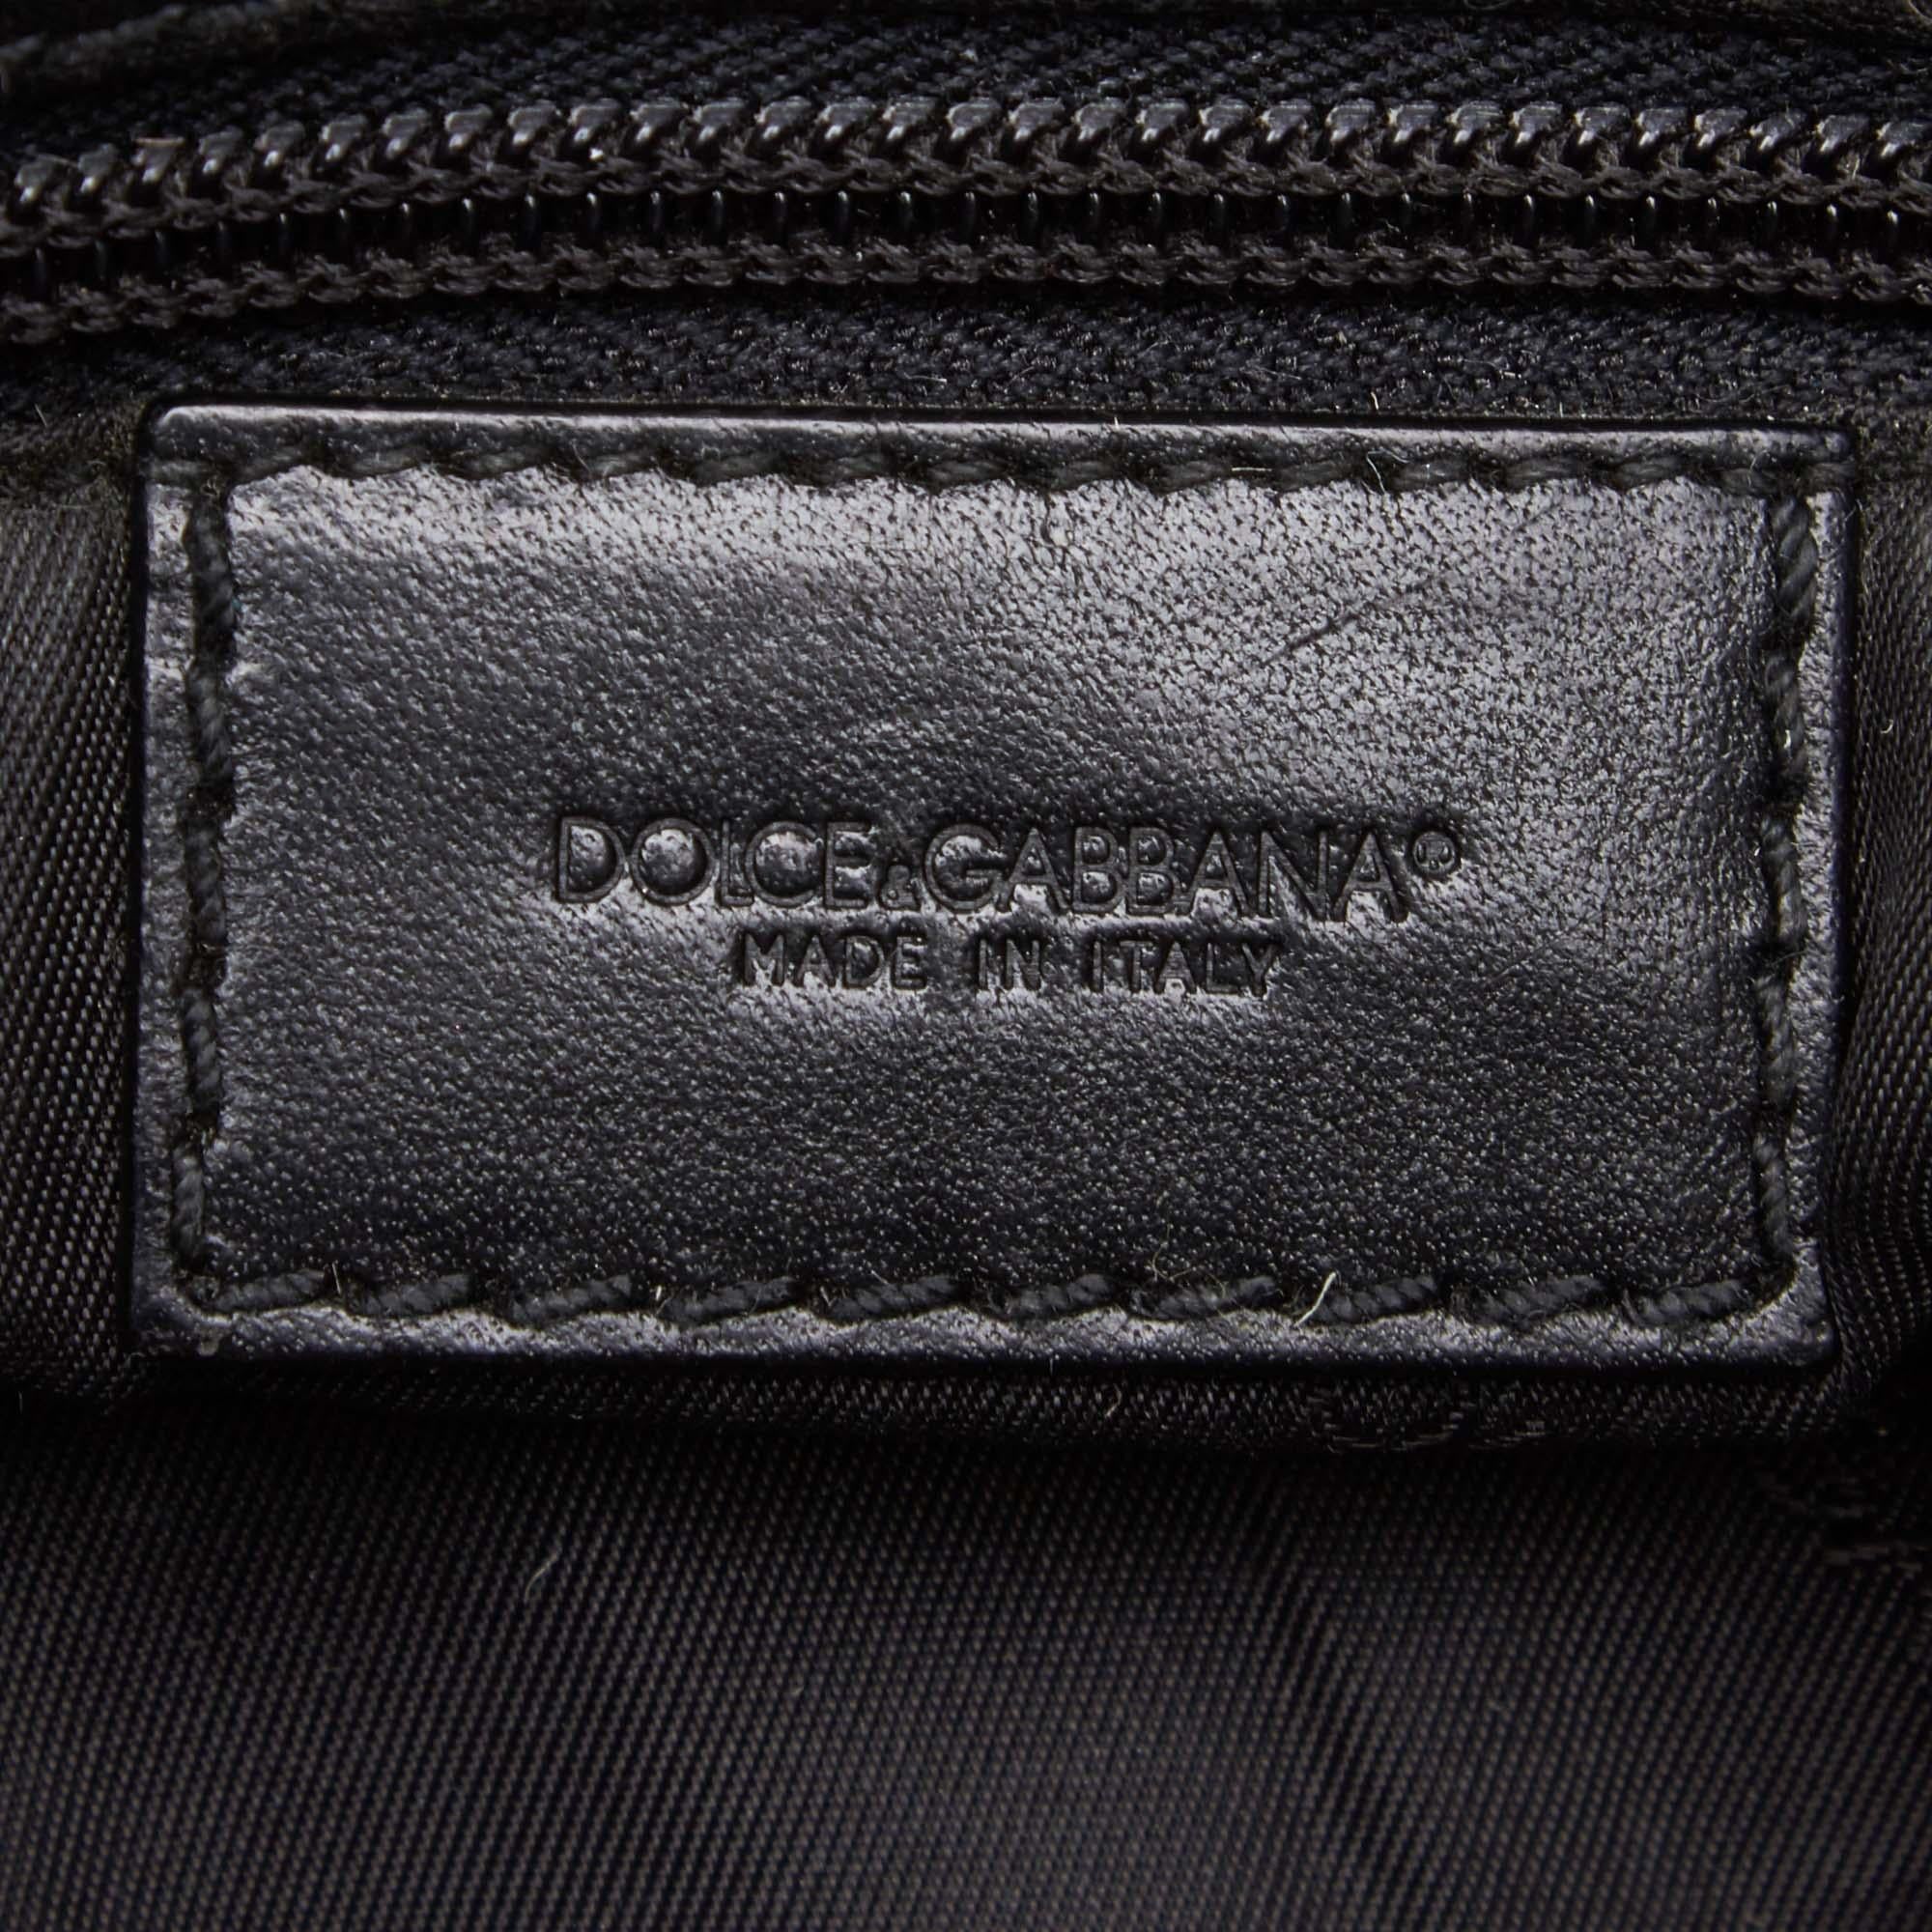 Vintage Authentic Dolce&Gabbana Black Leather Crossbody Bag Italy MEDIUM  For Sale 2